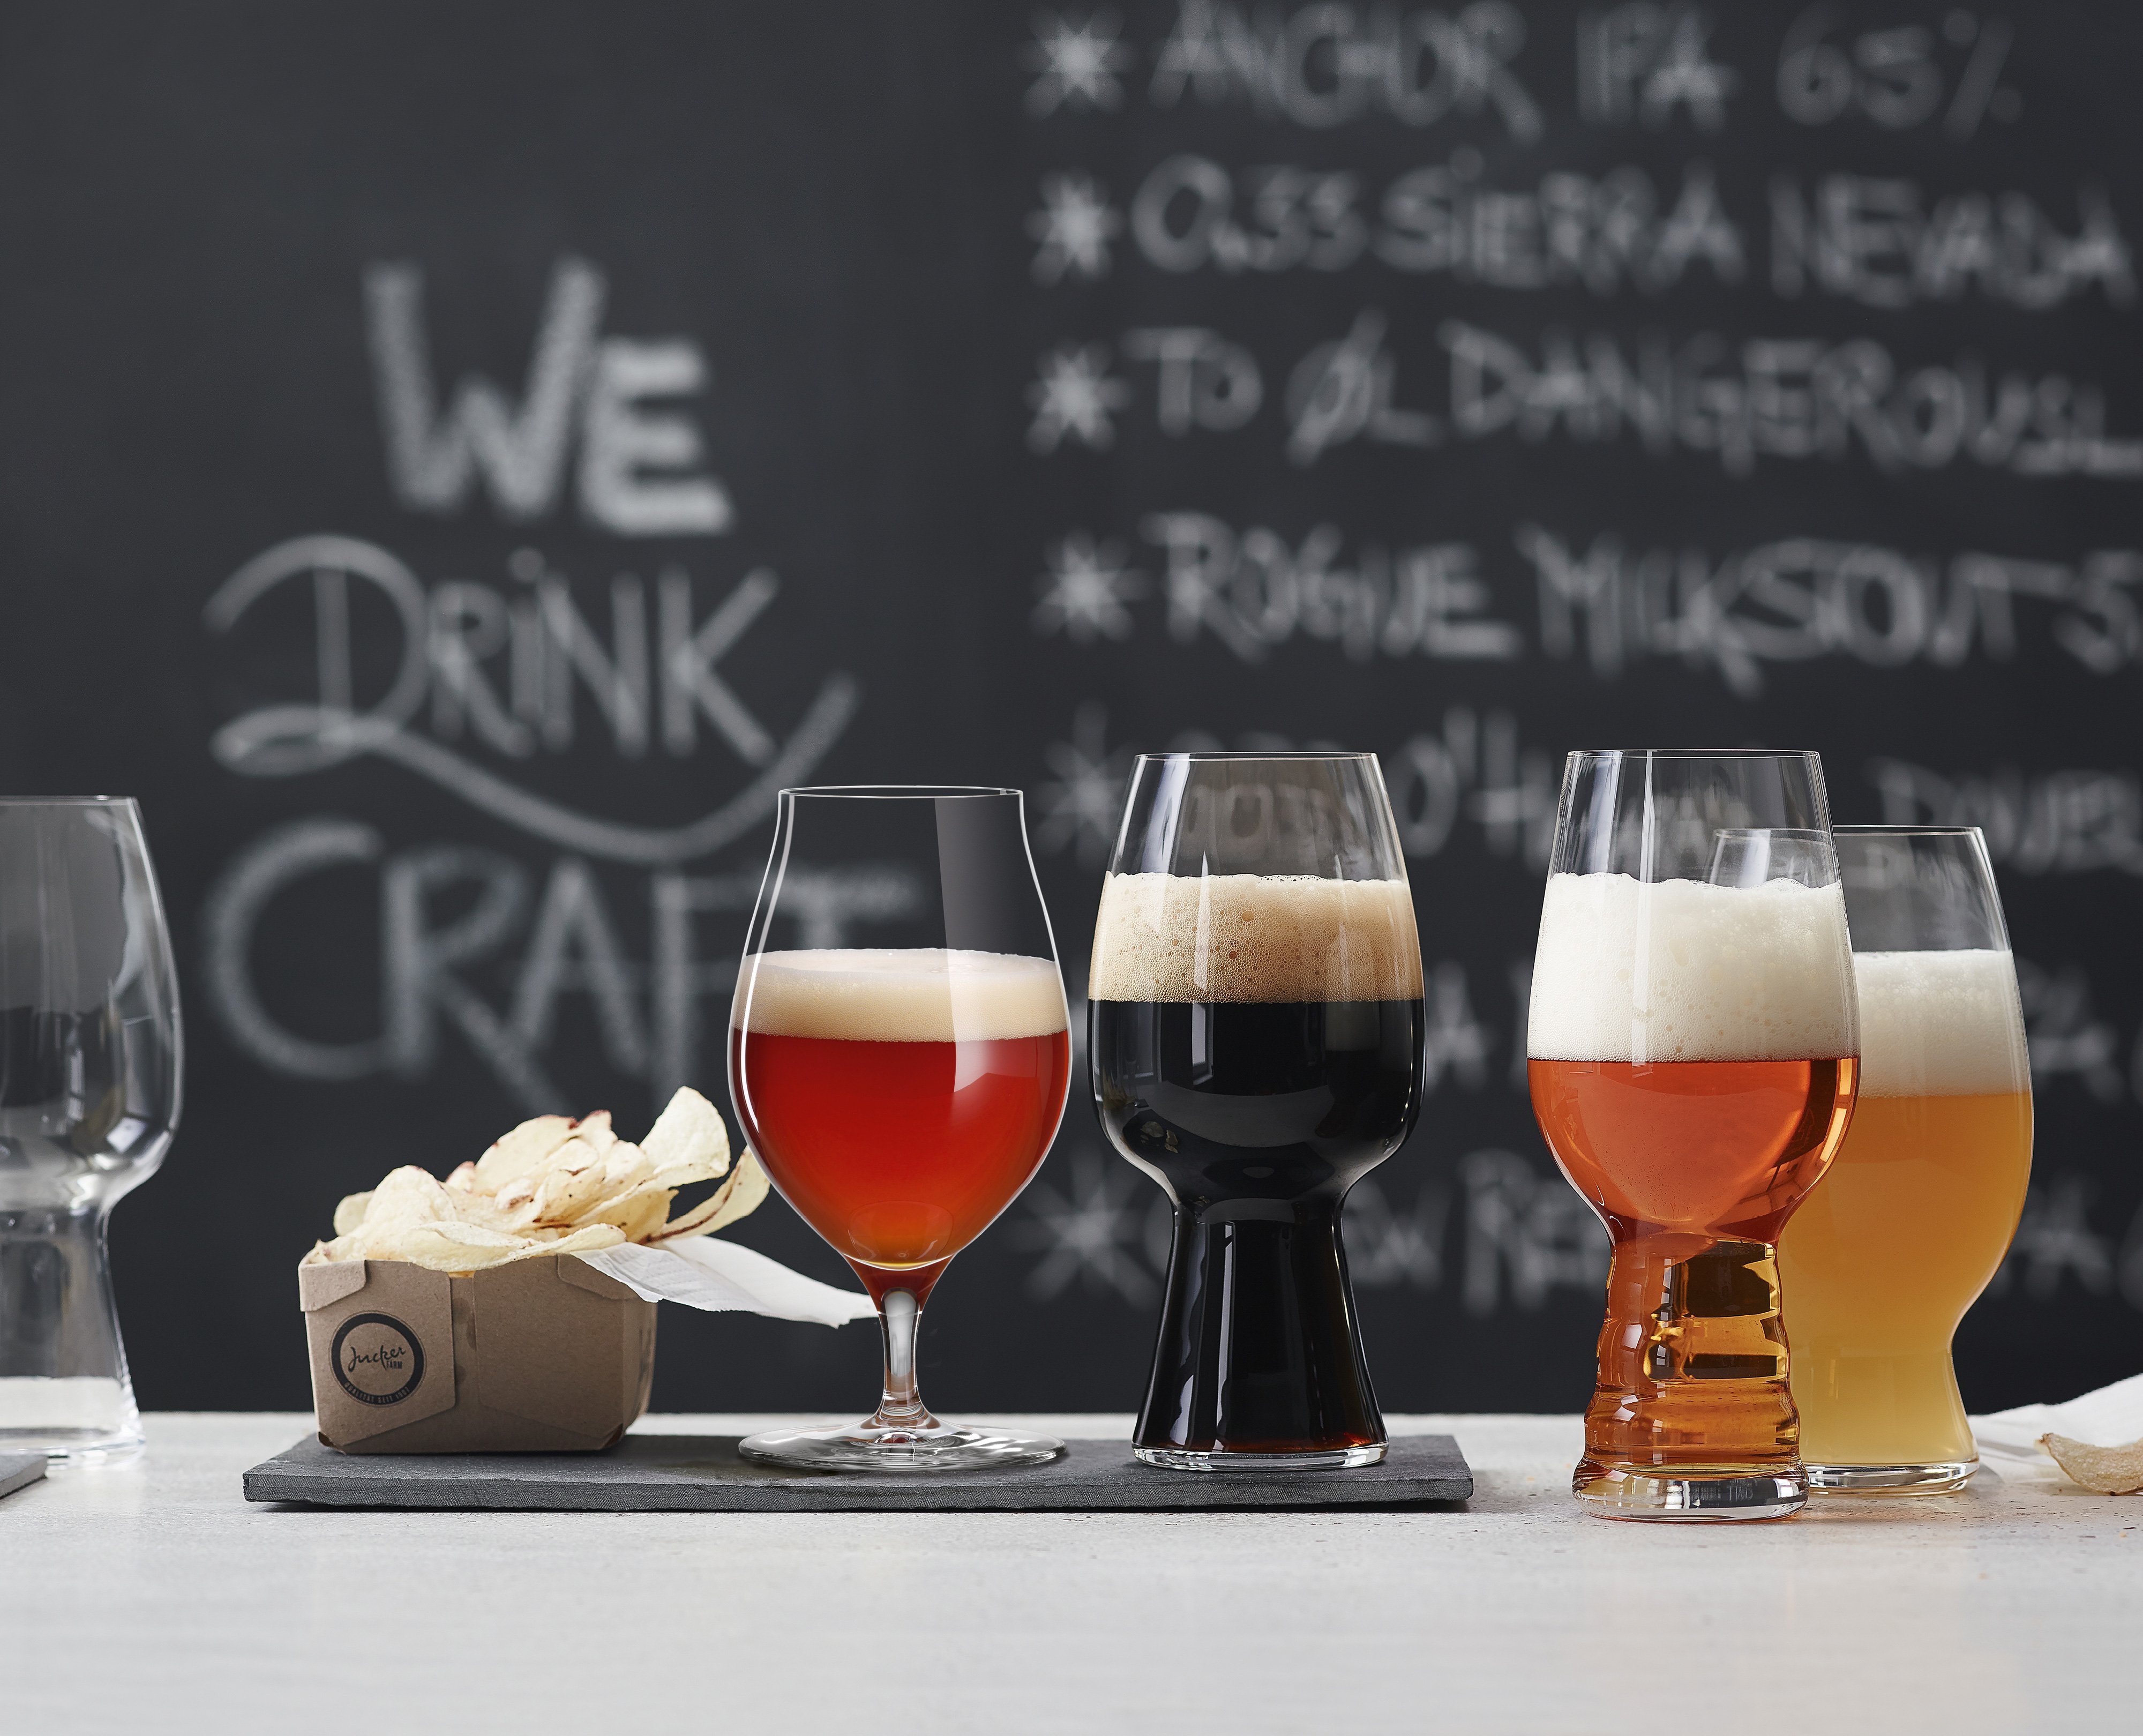 Tipos de vasos para la cerveza artesana - Craft Beer Culture